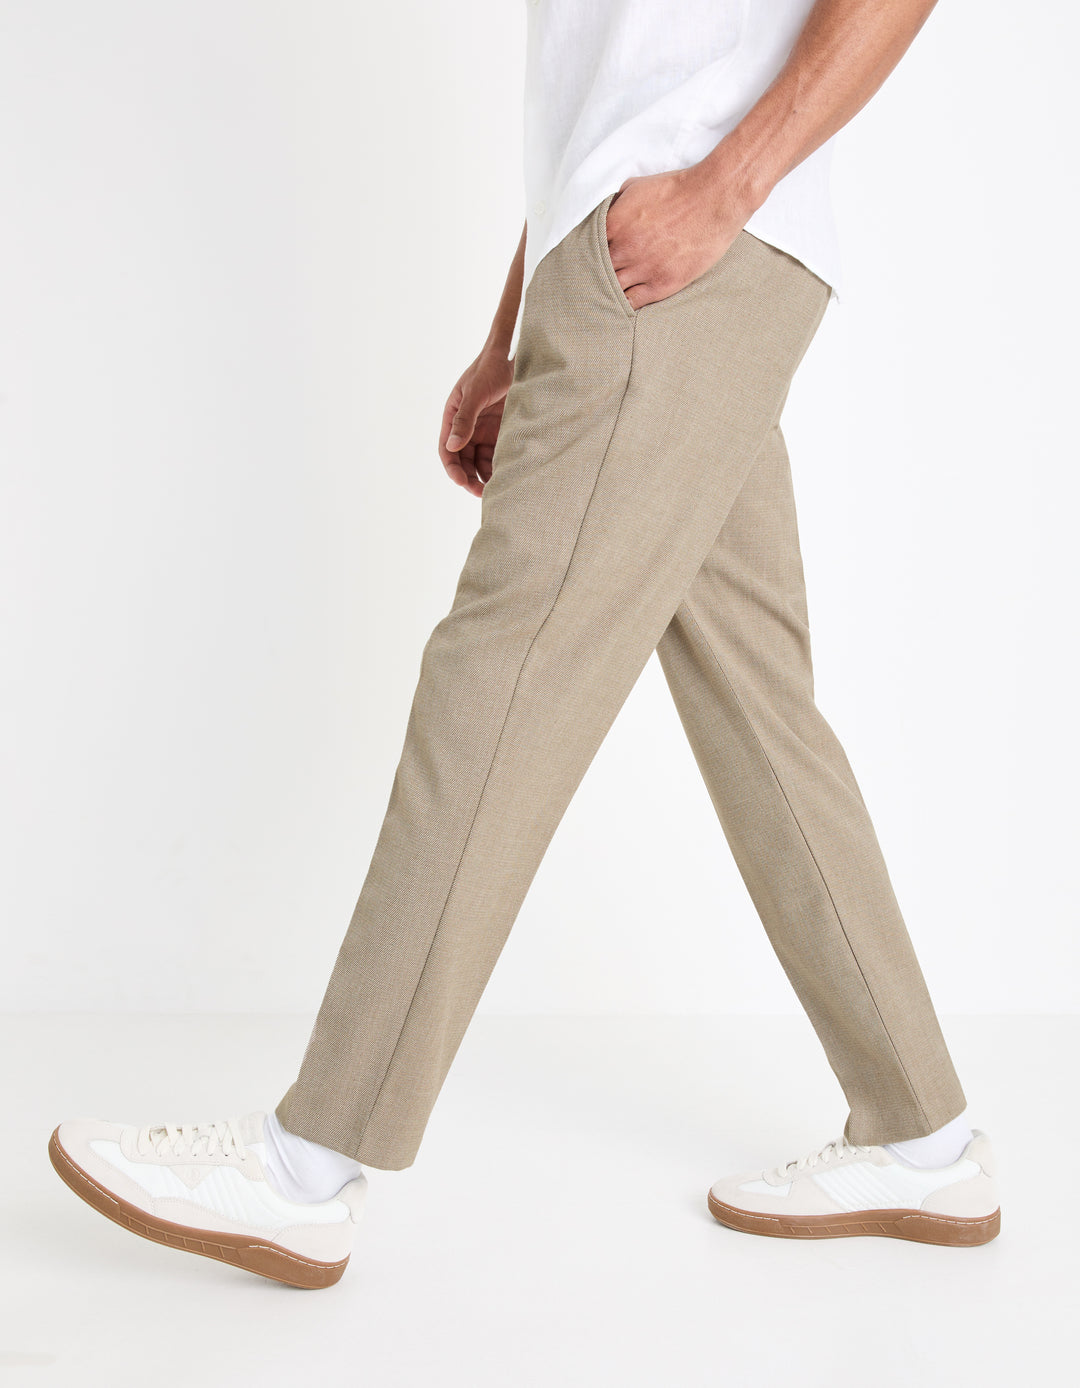 Unisex - Woven - Pants